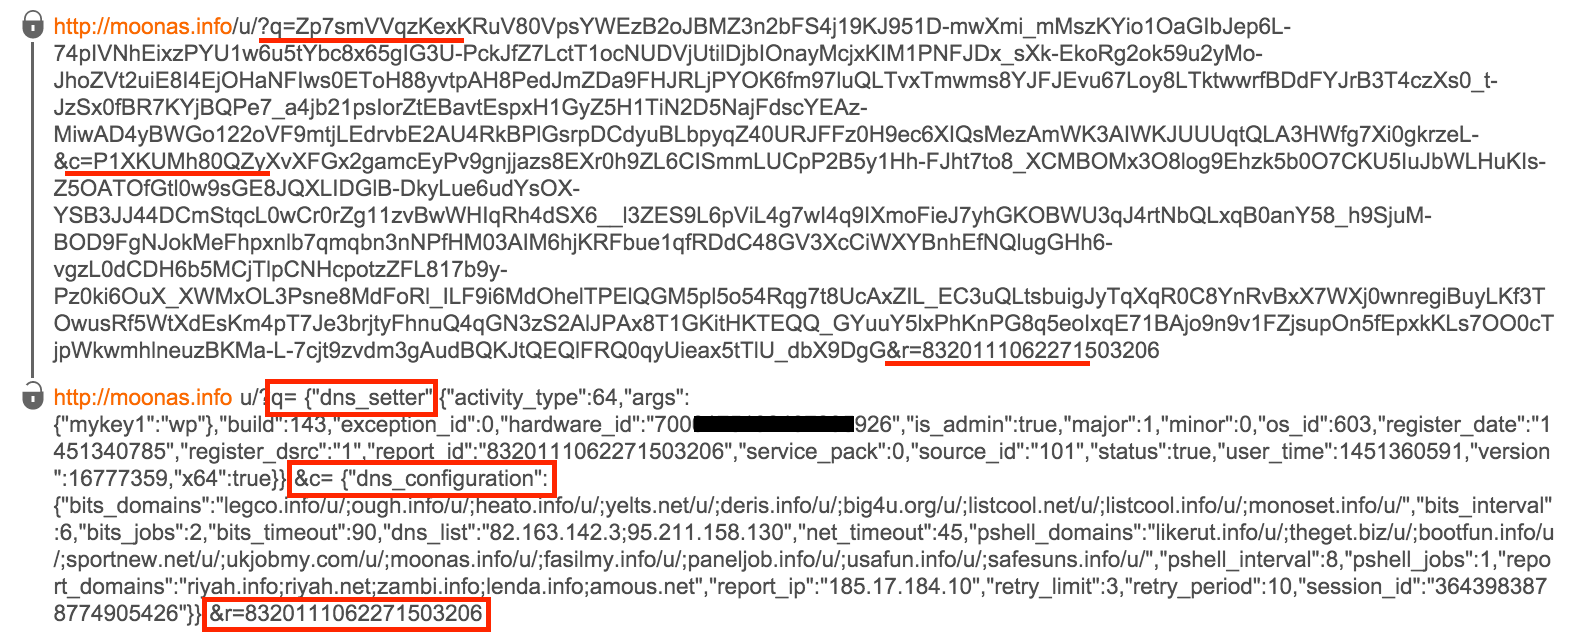 2. decoded URL in CTA